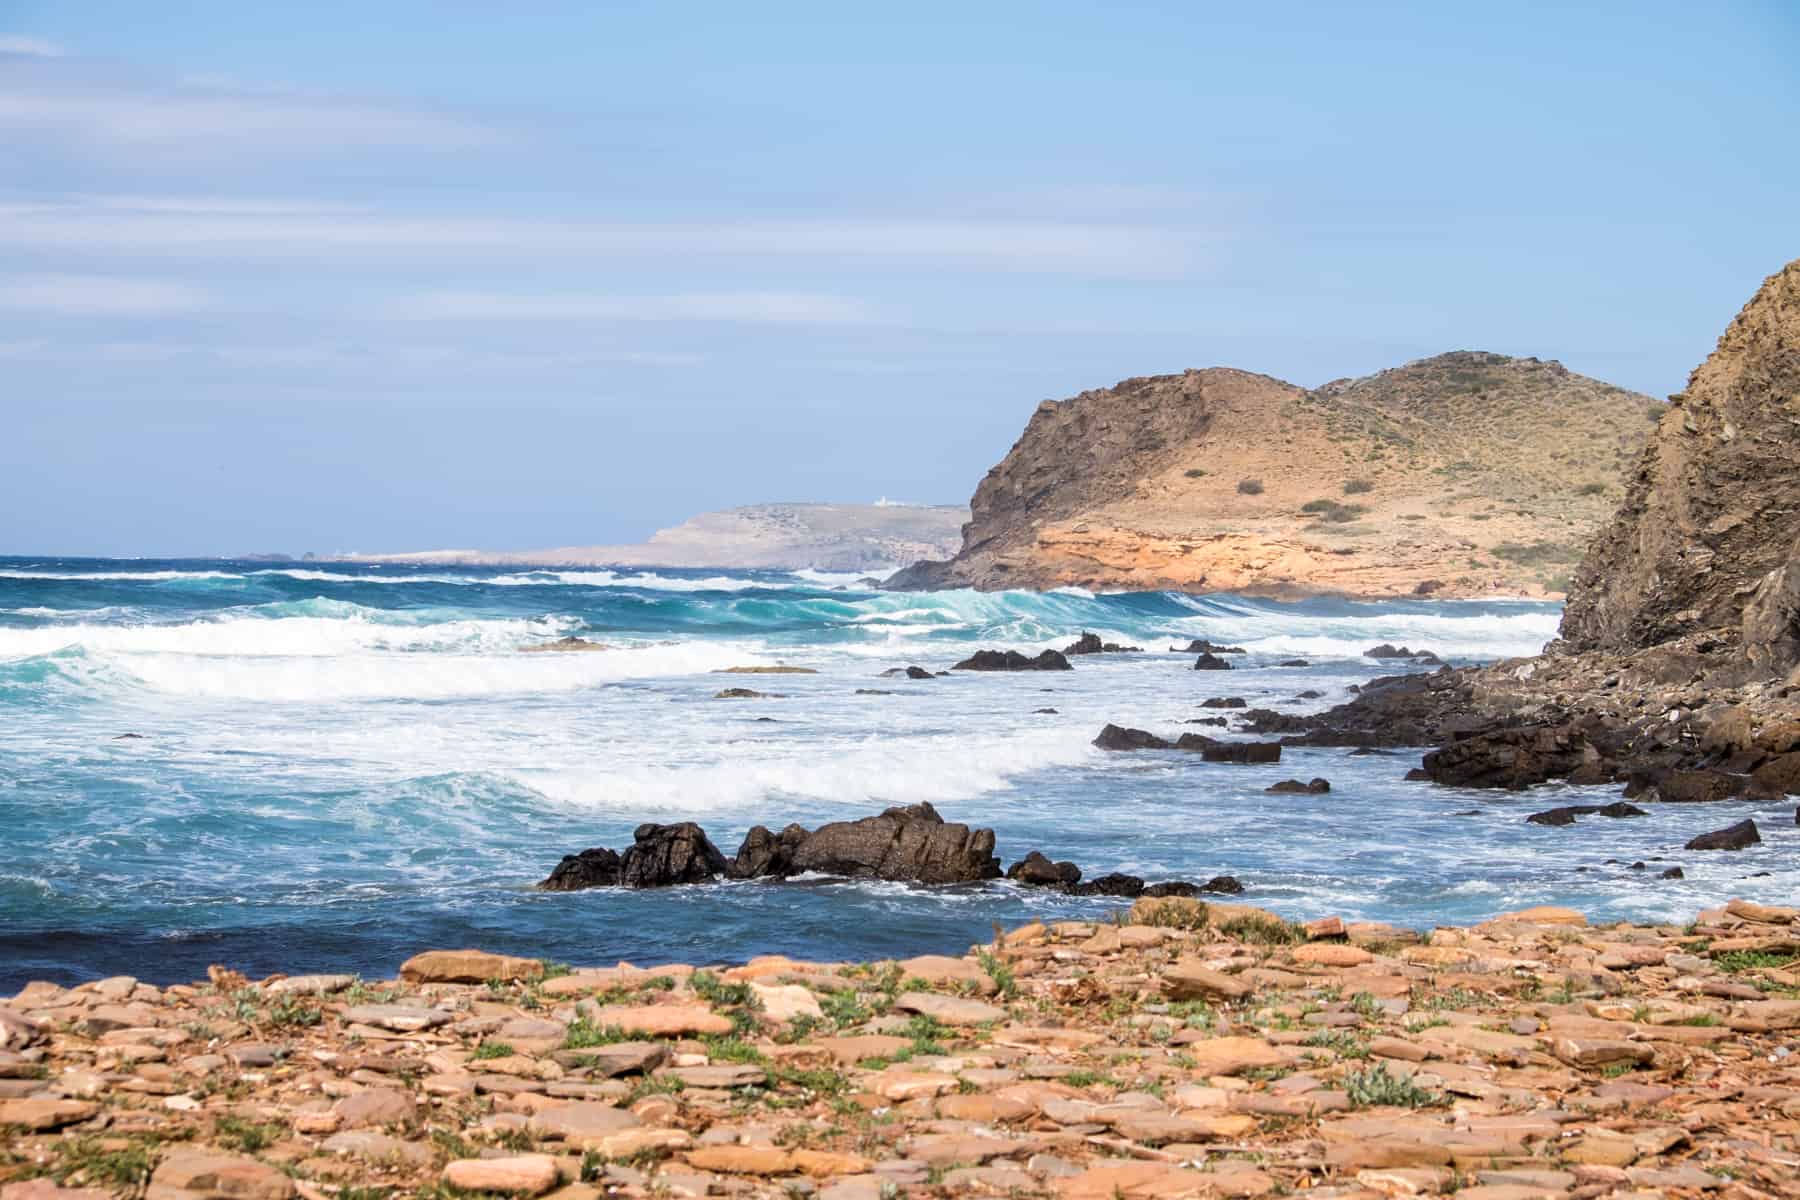 White Crashing waves from deep blue waters break on the golden rocky coastline of Menorca, Spain. 